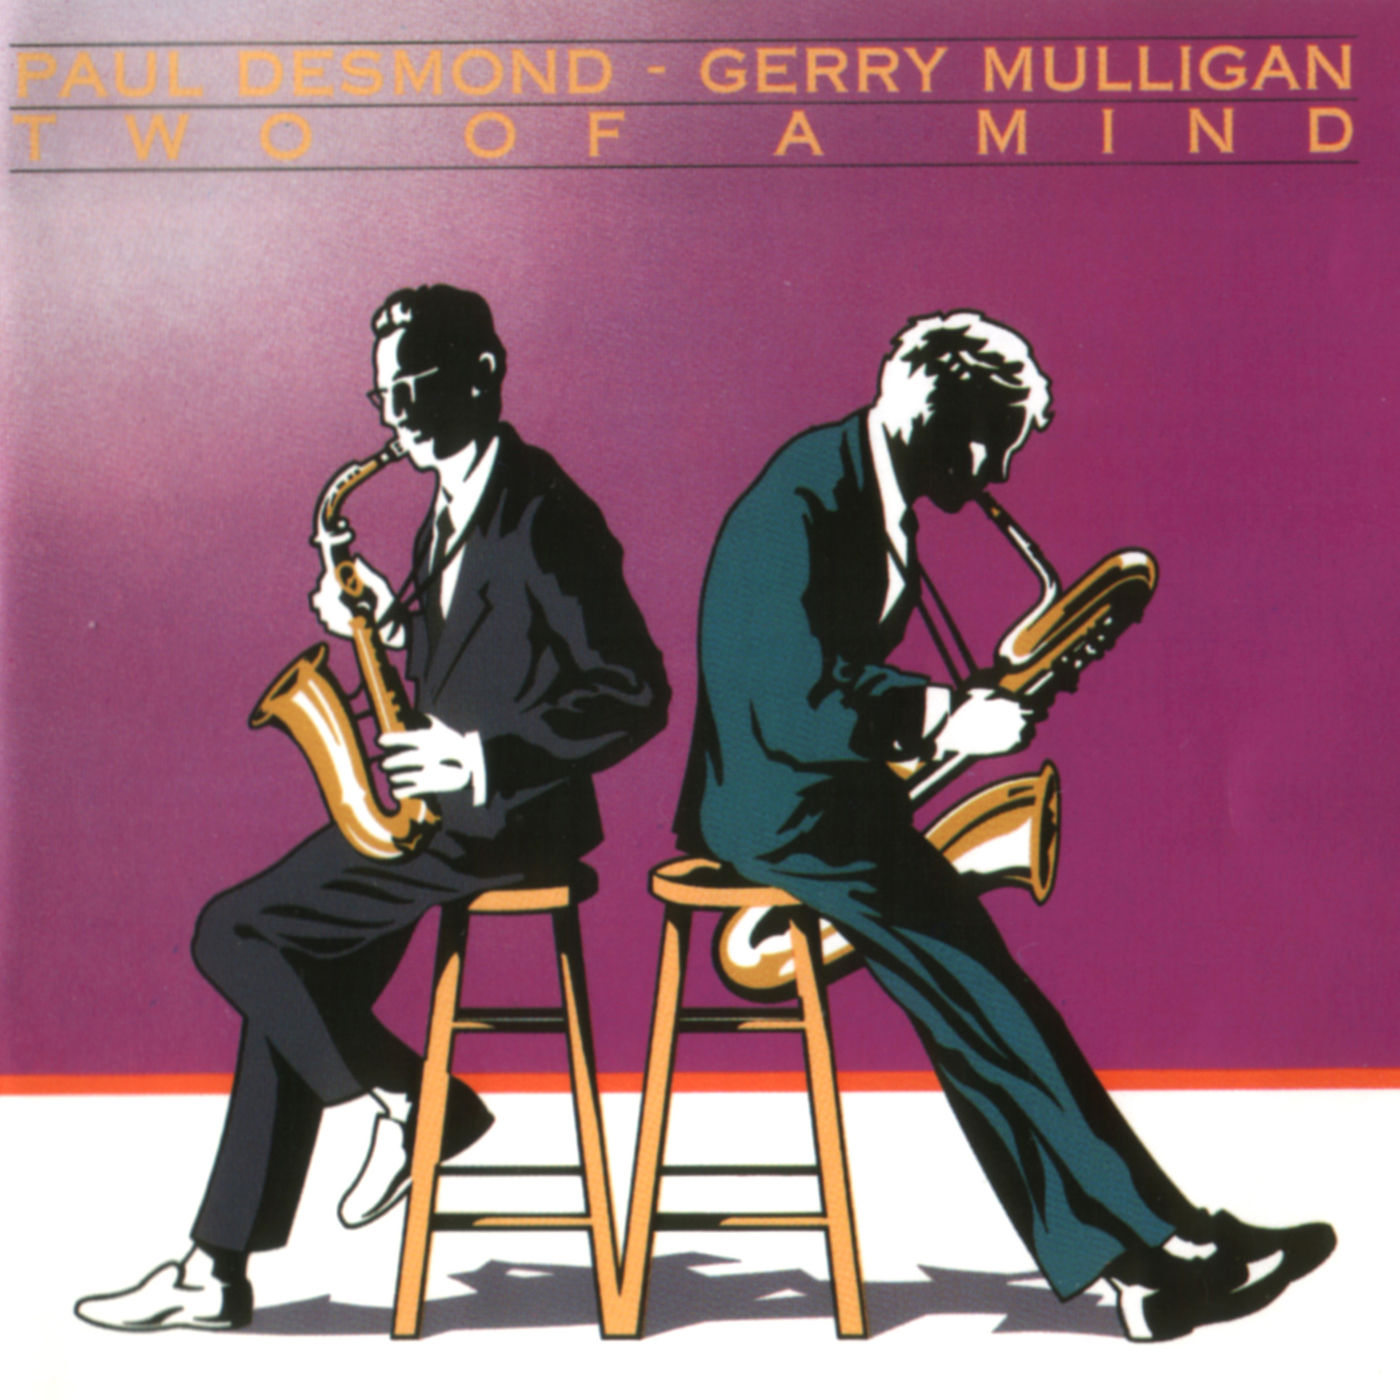 Paul Desmond & Gerry Mulligan - Two Of A Mind (1962/2015) [FLAC 24bit/44,1kHz]